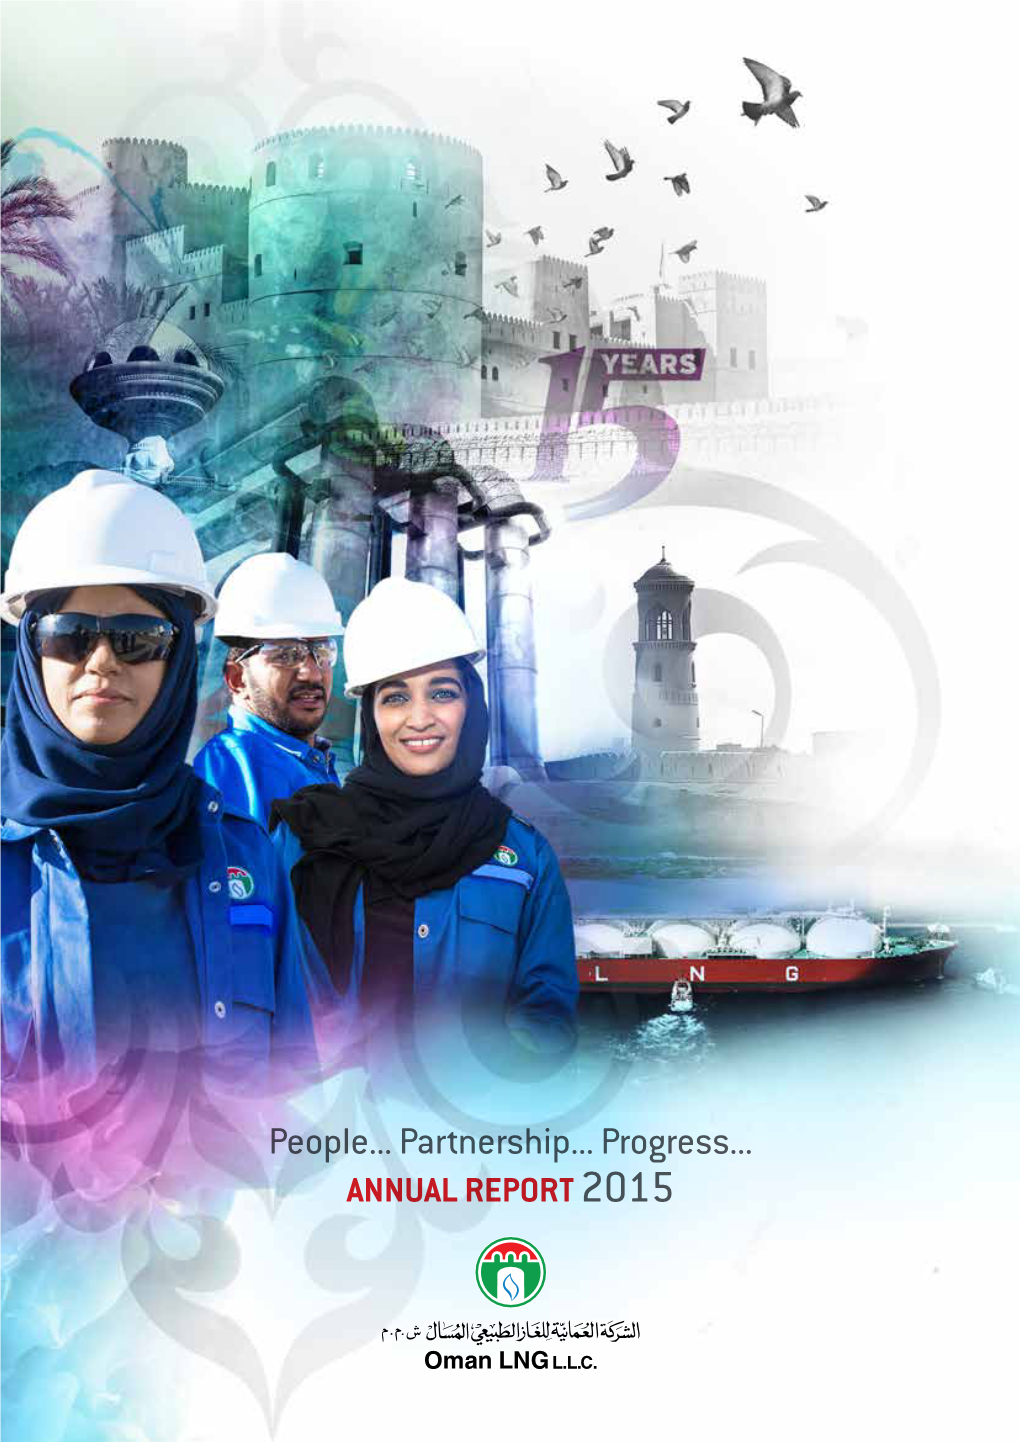 People... Partnership... Progress... ANNUAL REPORT 2015